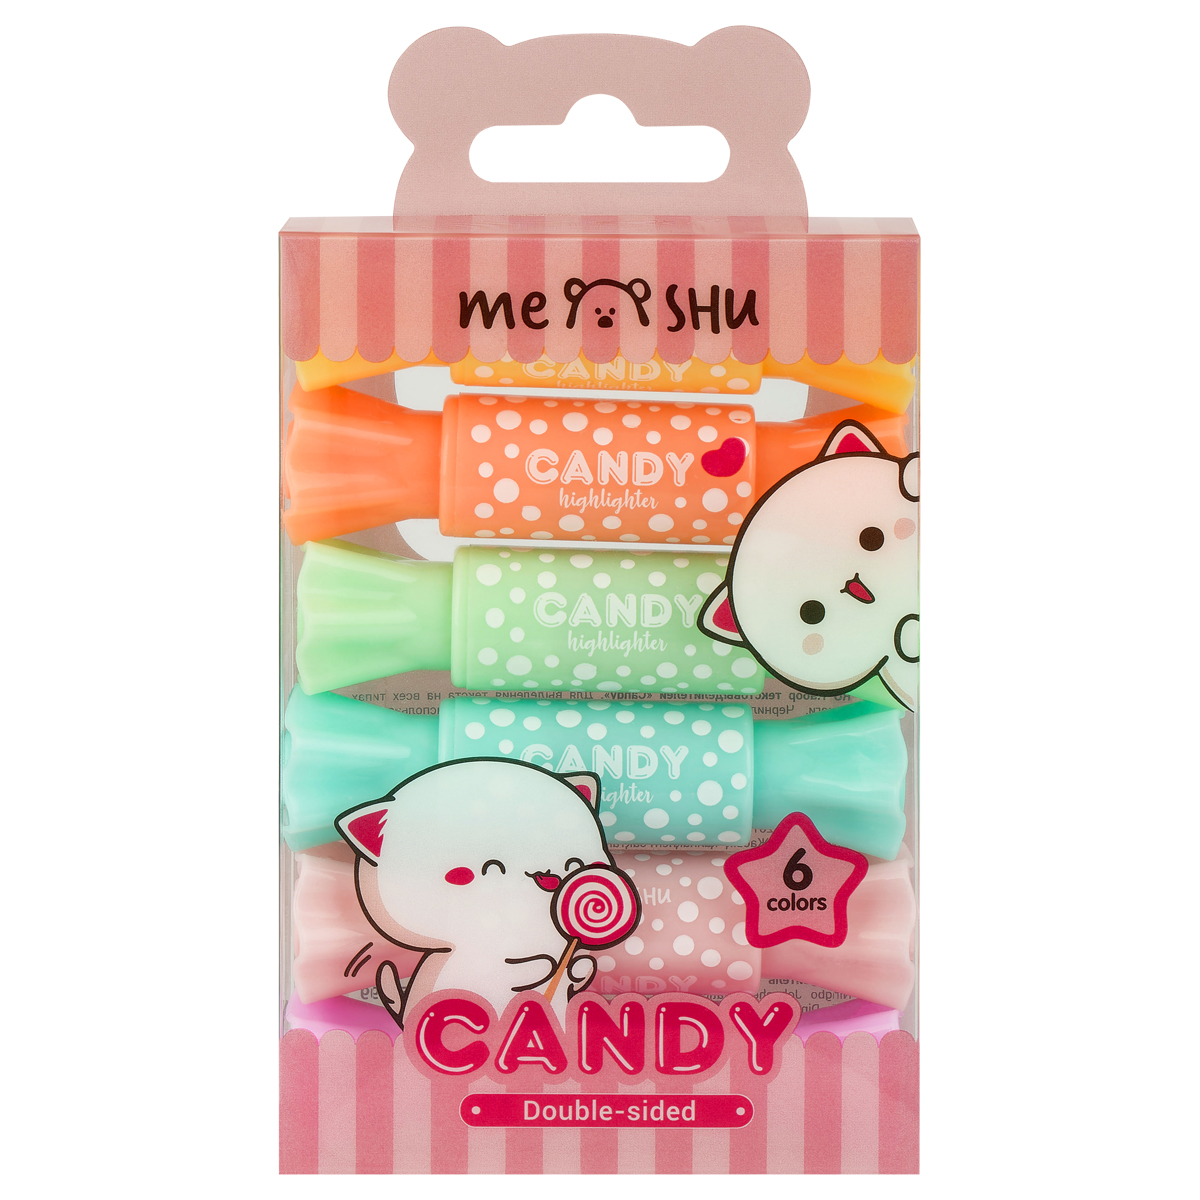    MESHU Candy, 6 .,  , 2/4,    